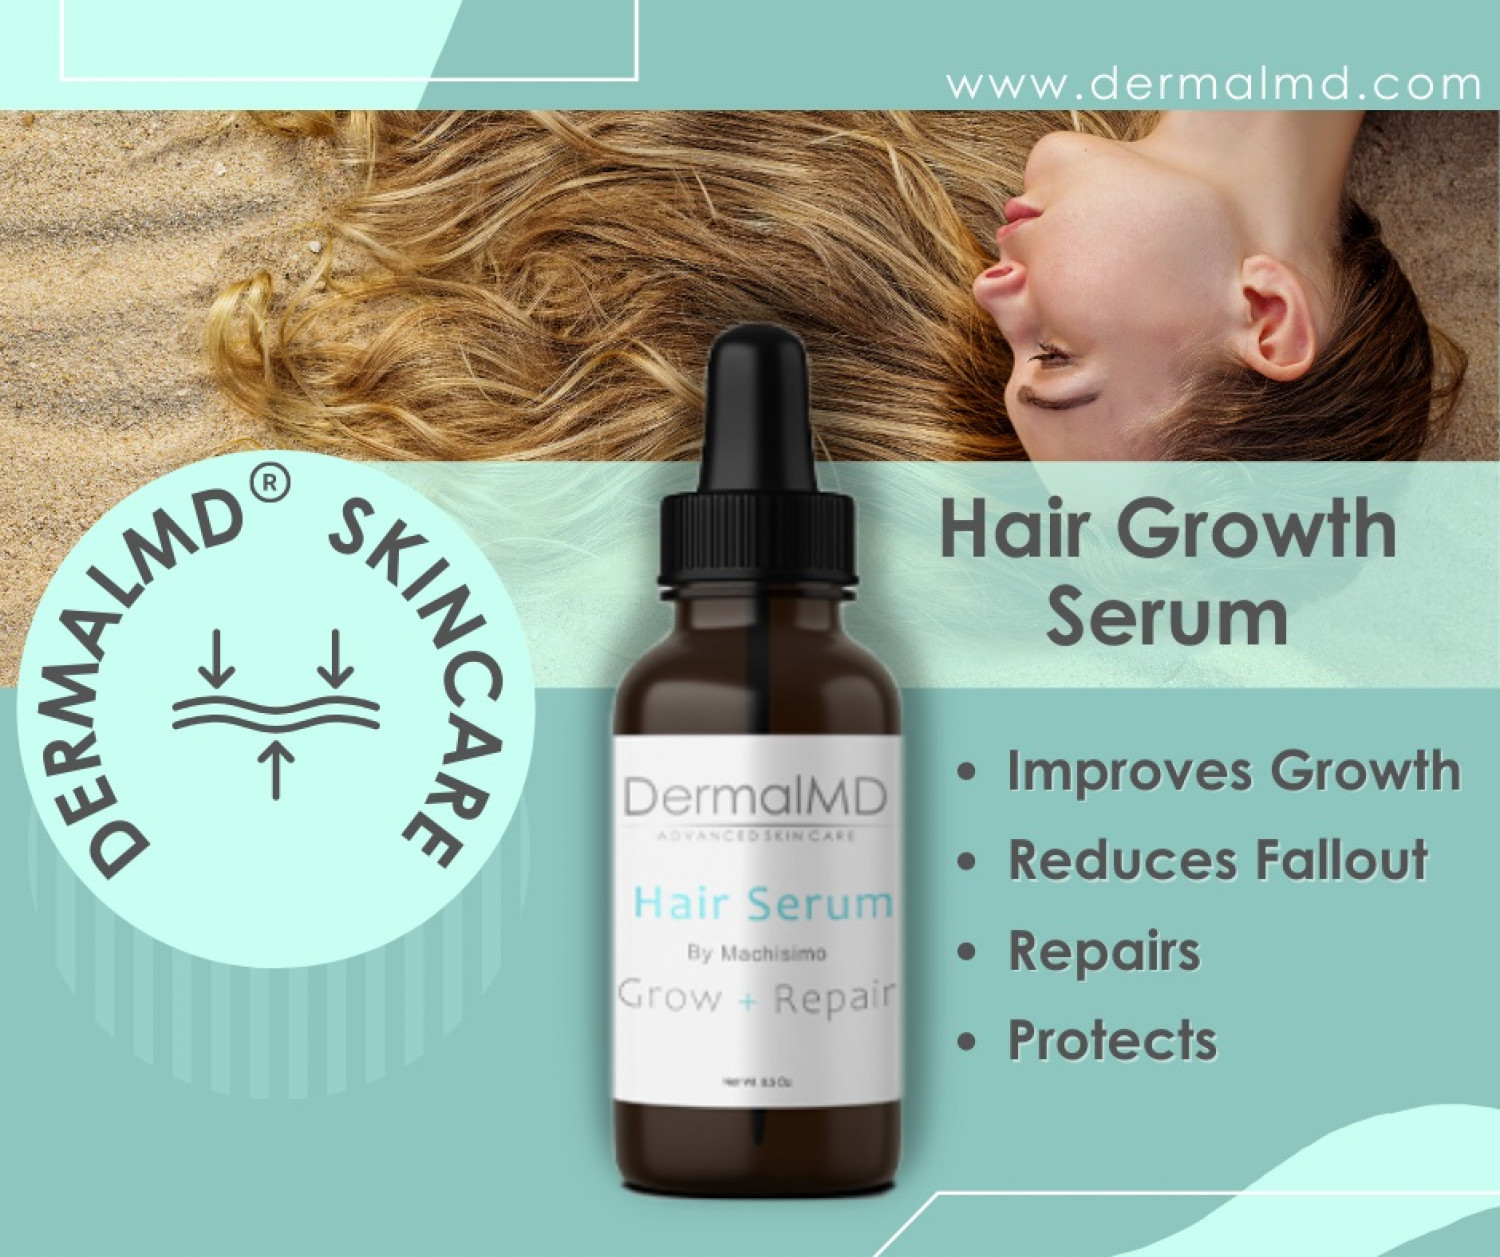 DermalMD's Hair Growth Serum Infographic